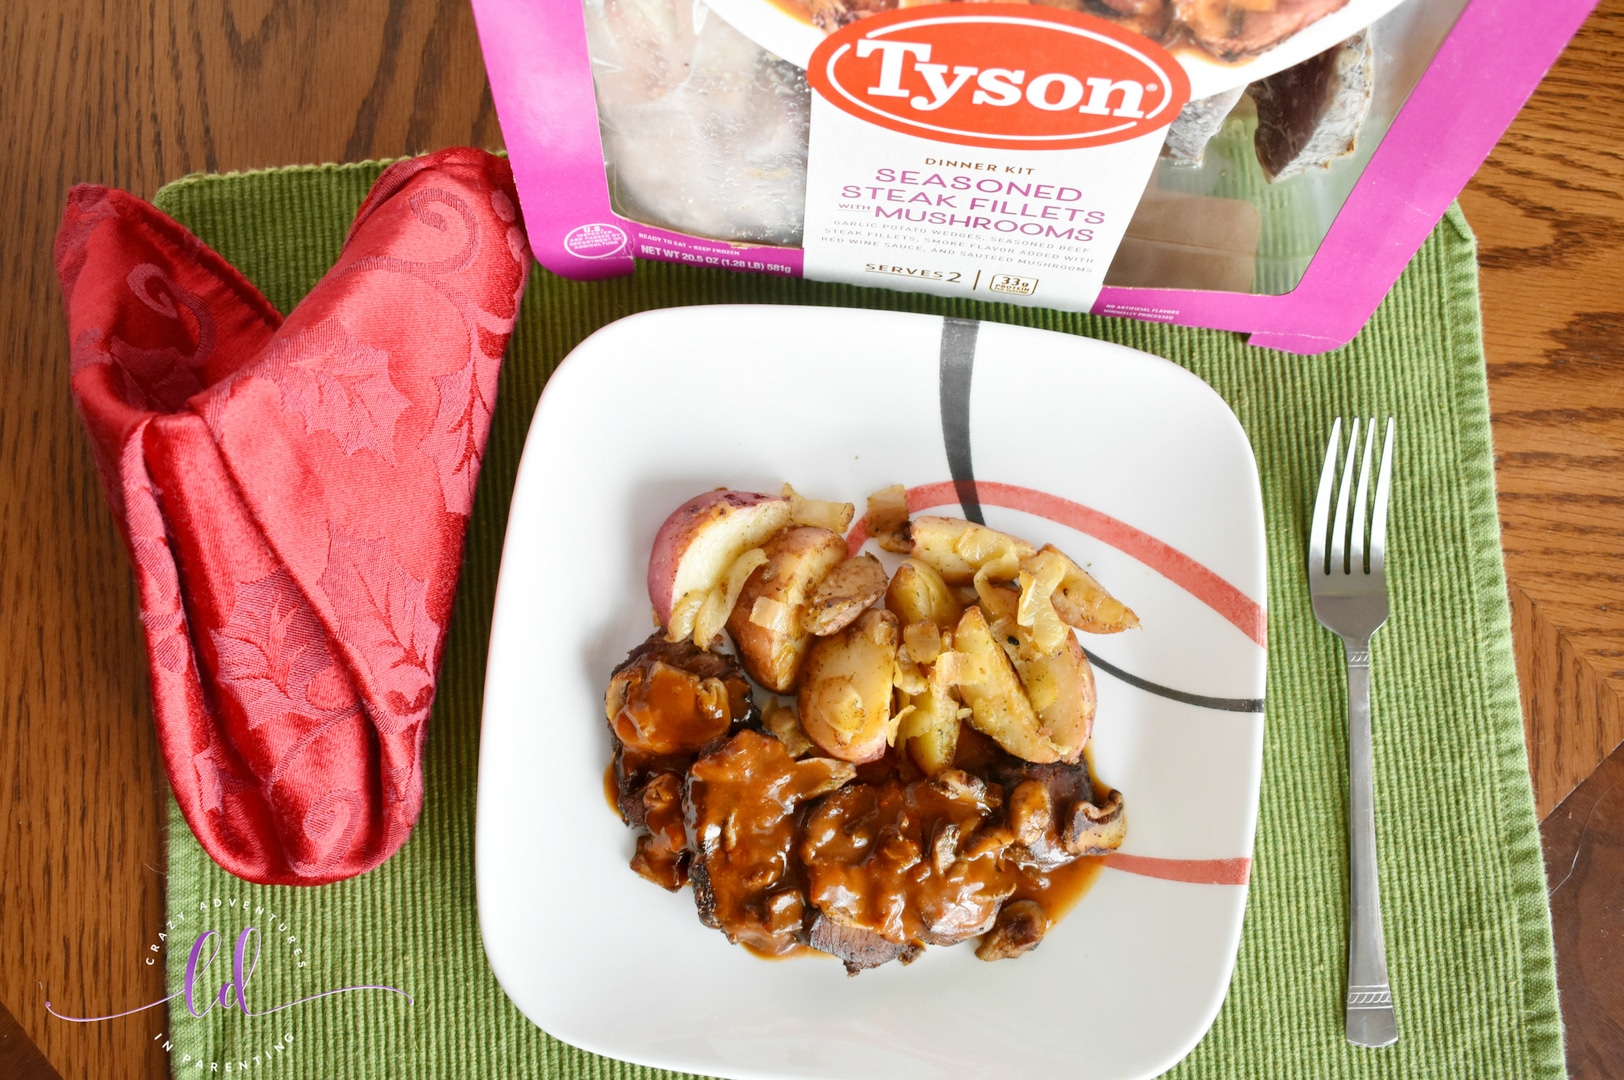 Tyson Fully Cooked Dinner and Entrée Kit - Seasoned Steak Fillet & Mushrooms ready to enjoy